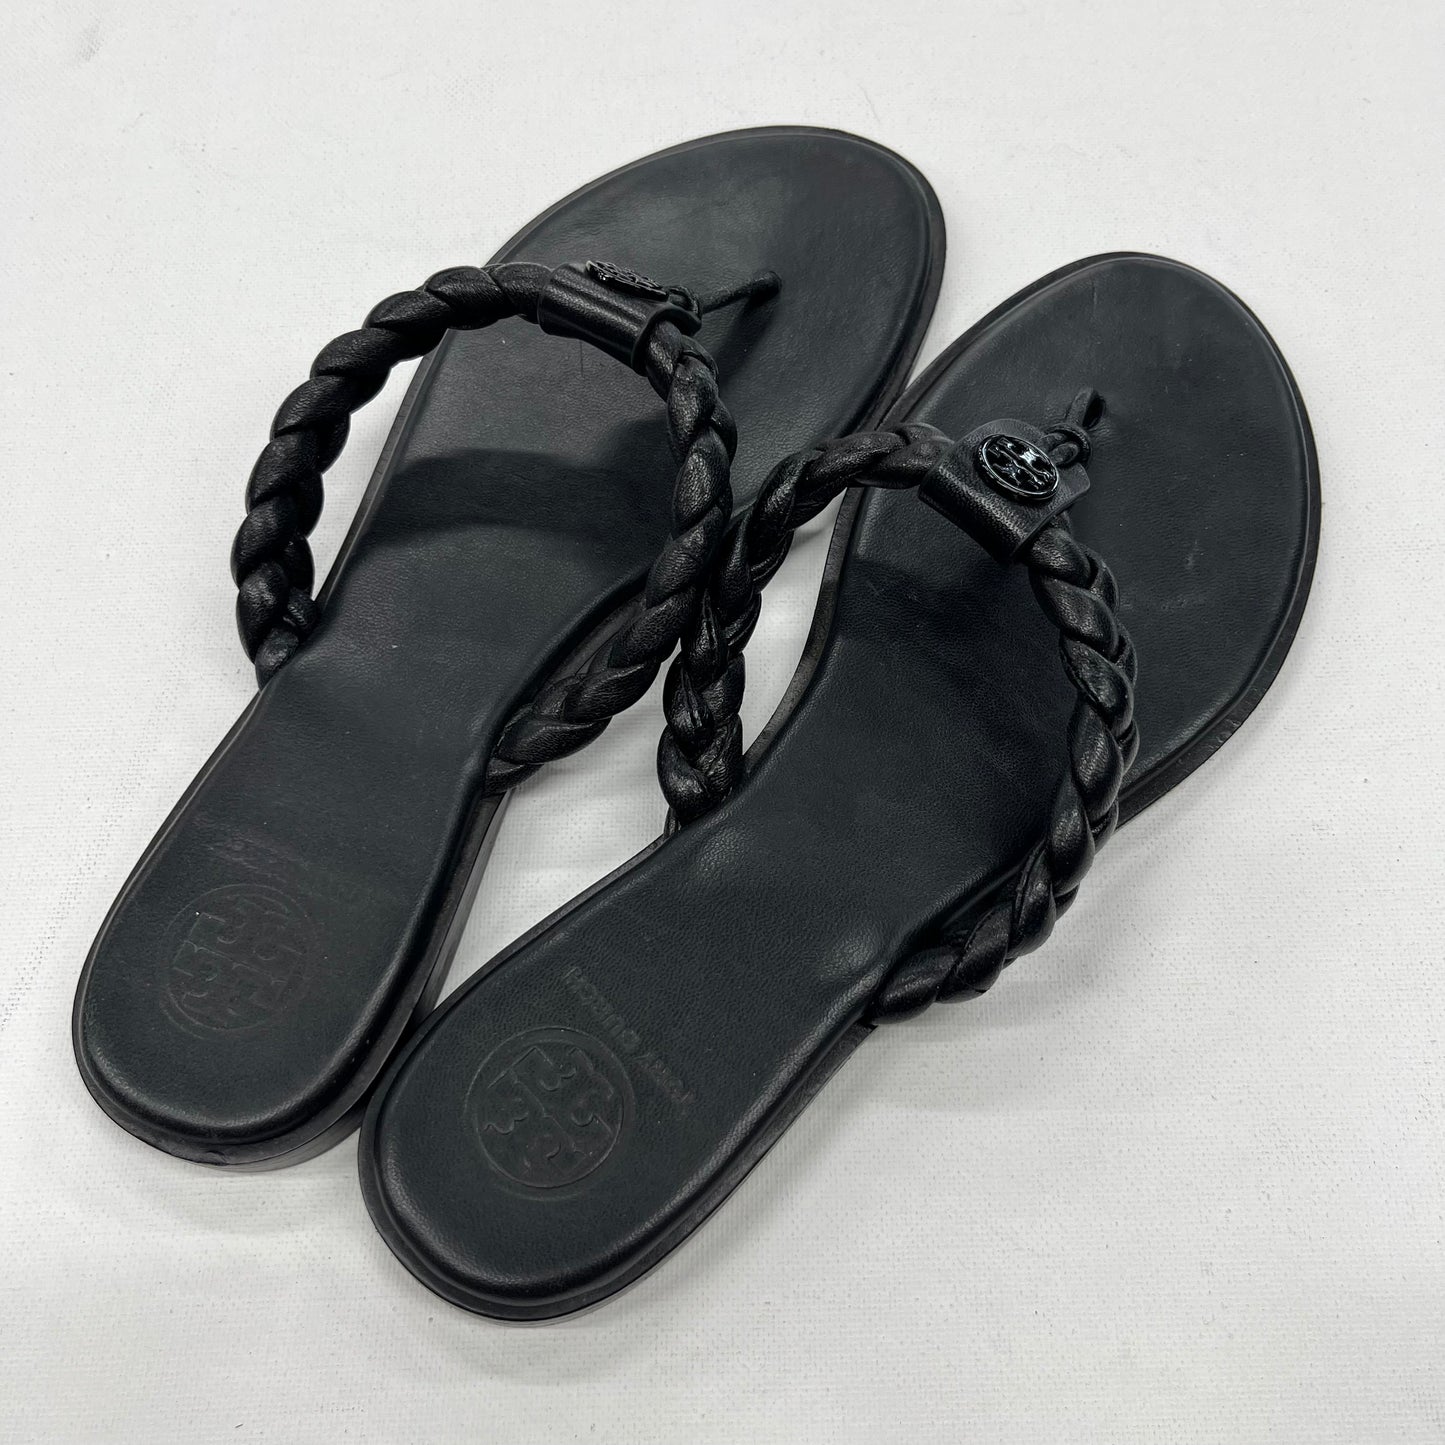 Sandals Flip Flops By Tory Burch  Size: 6.5